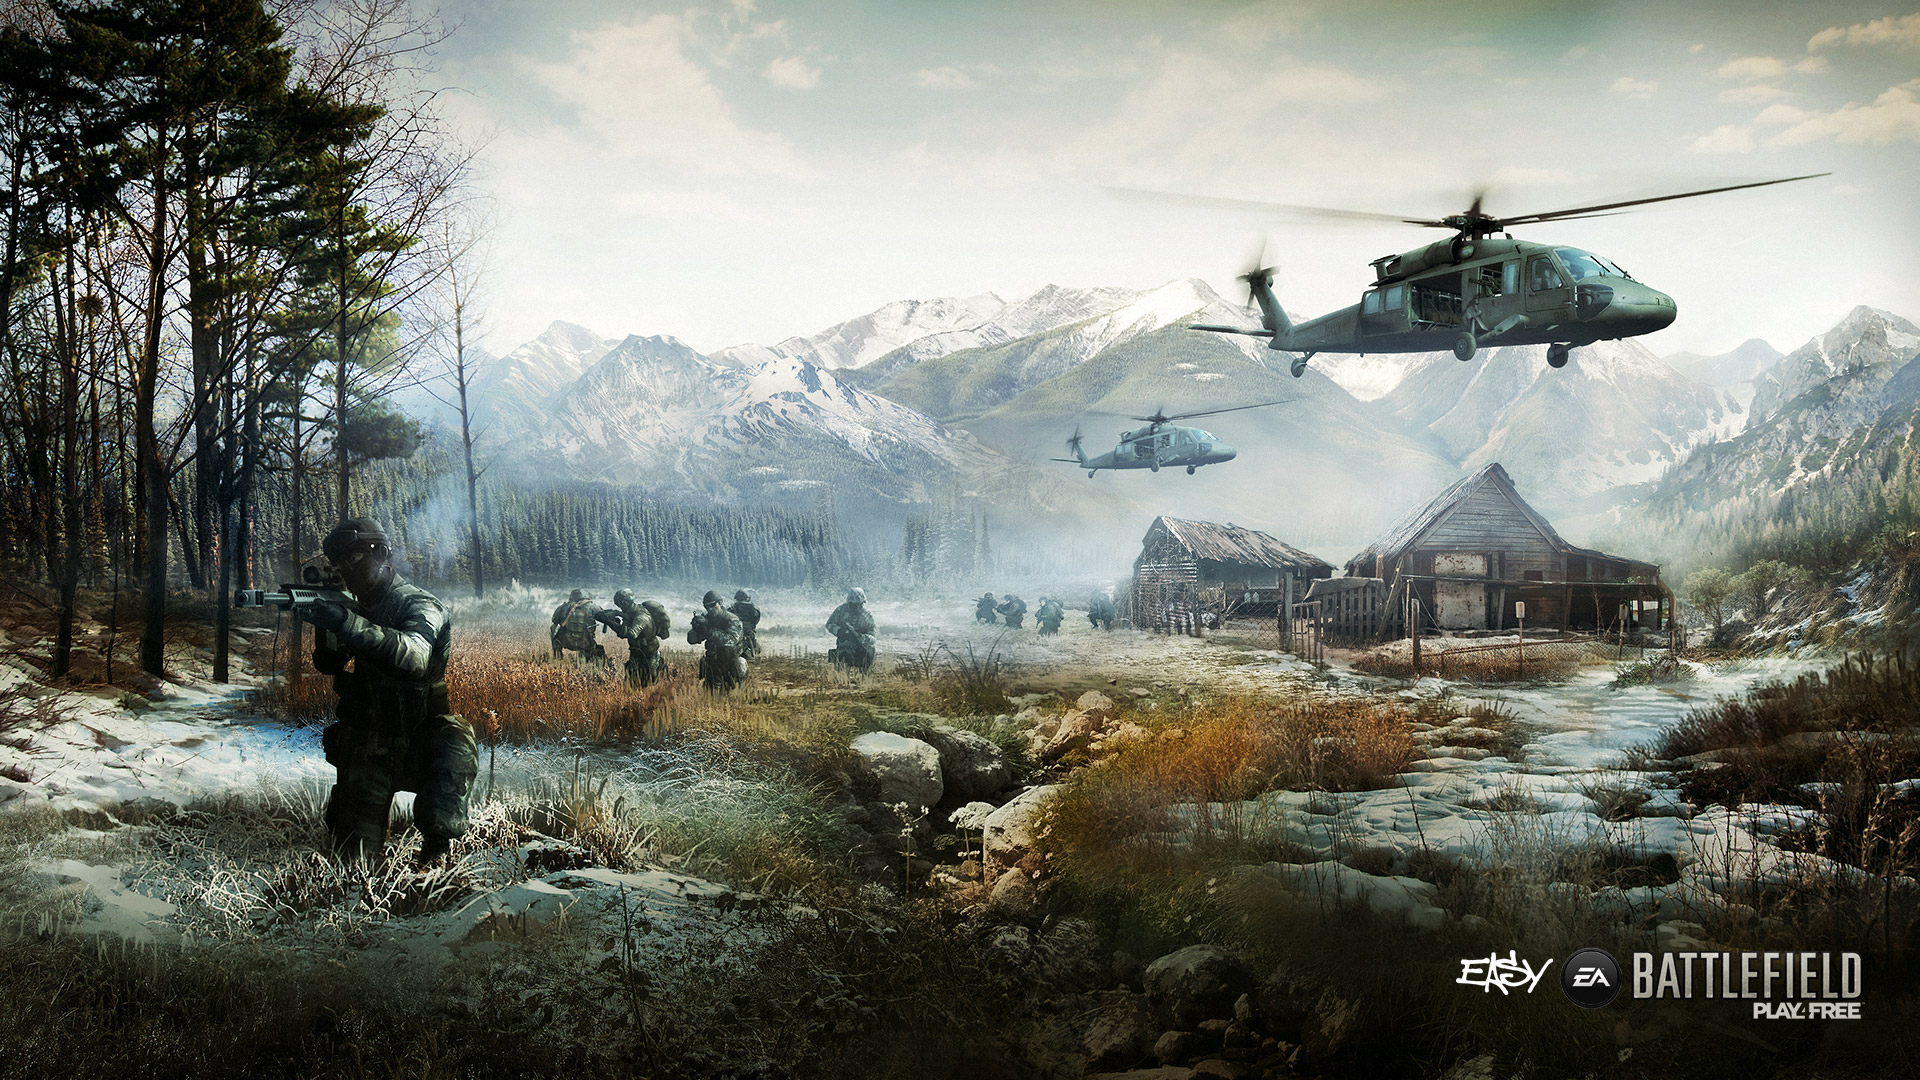 Battlefield 4 HD Wallpapers   Battlefield   PS3 Games wallpapers   HD